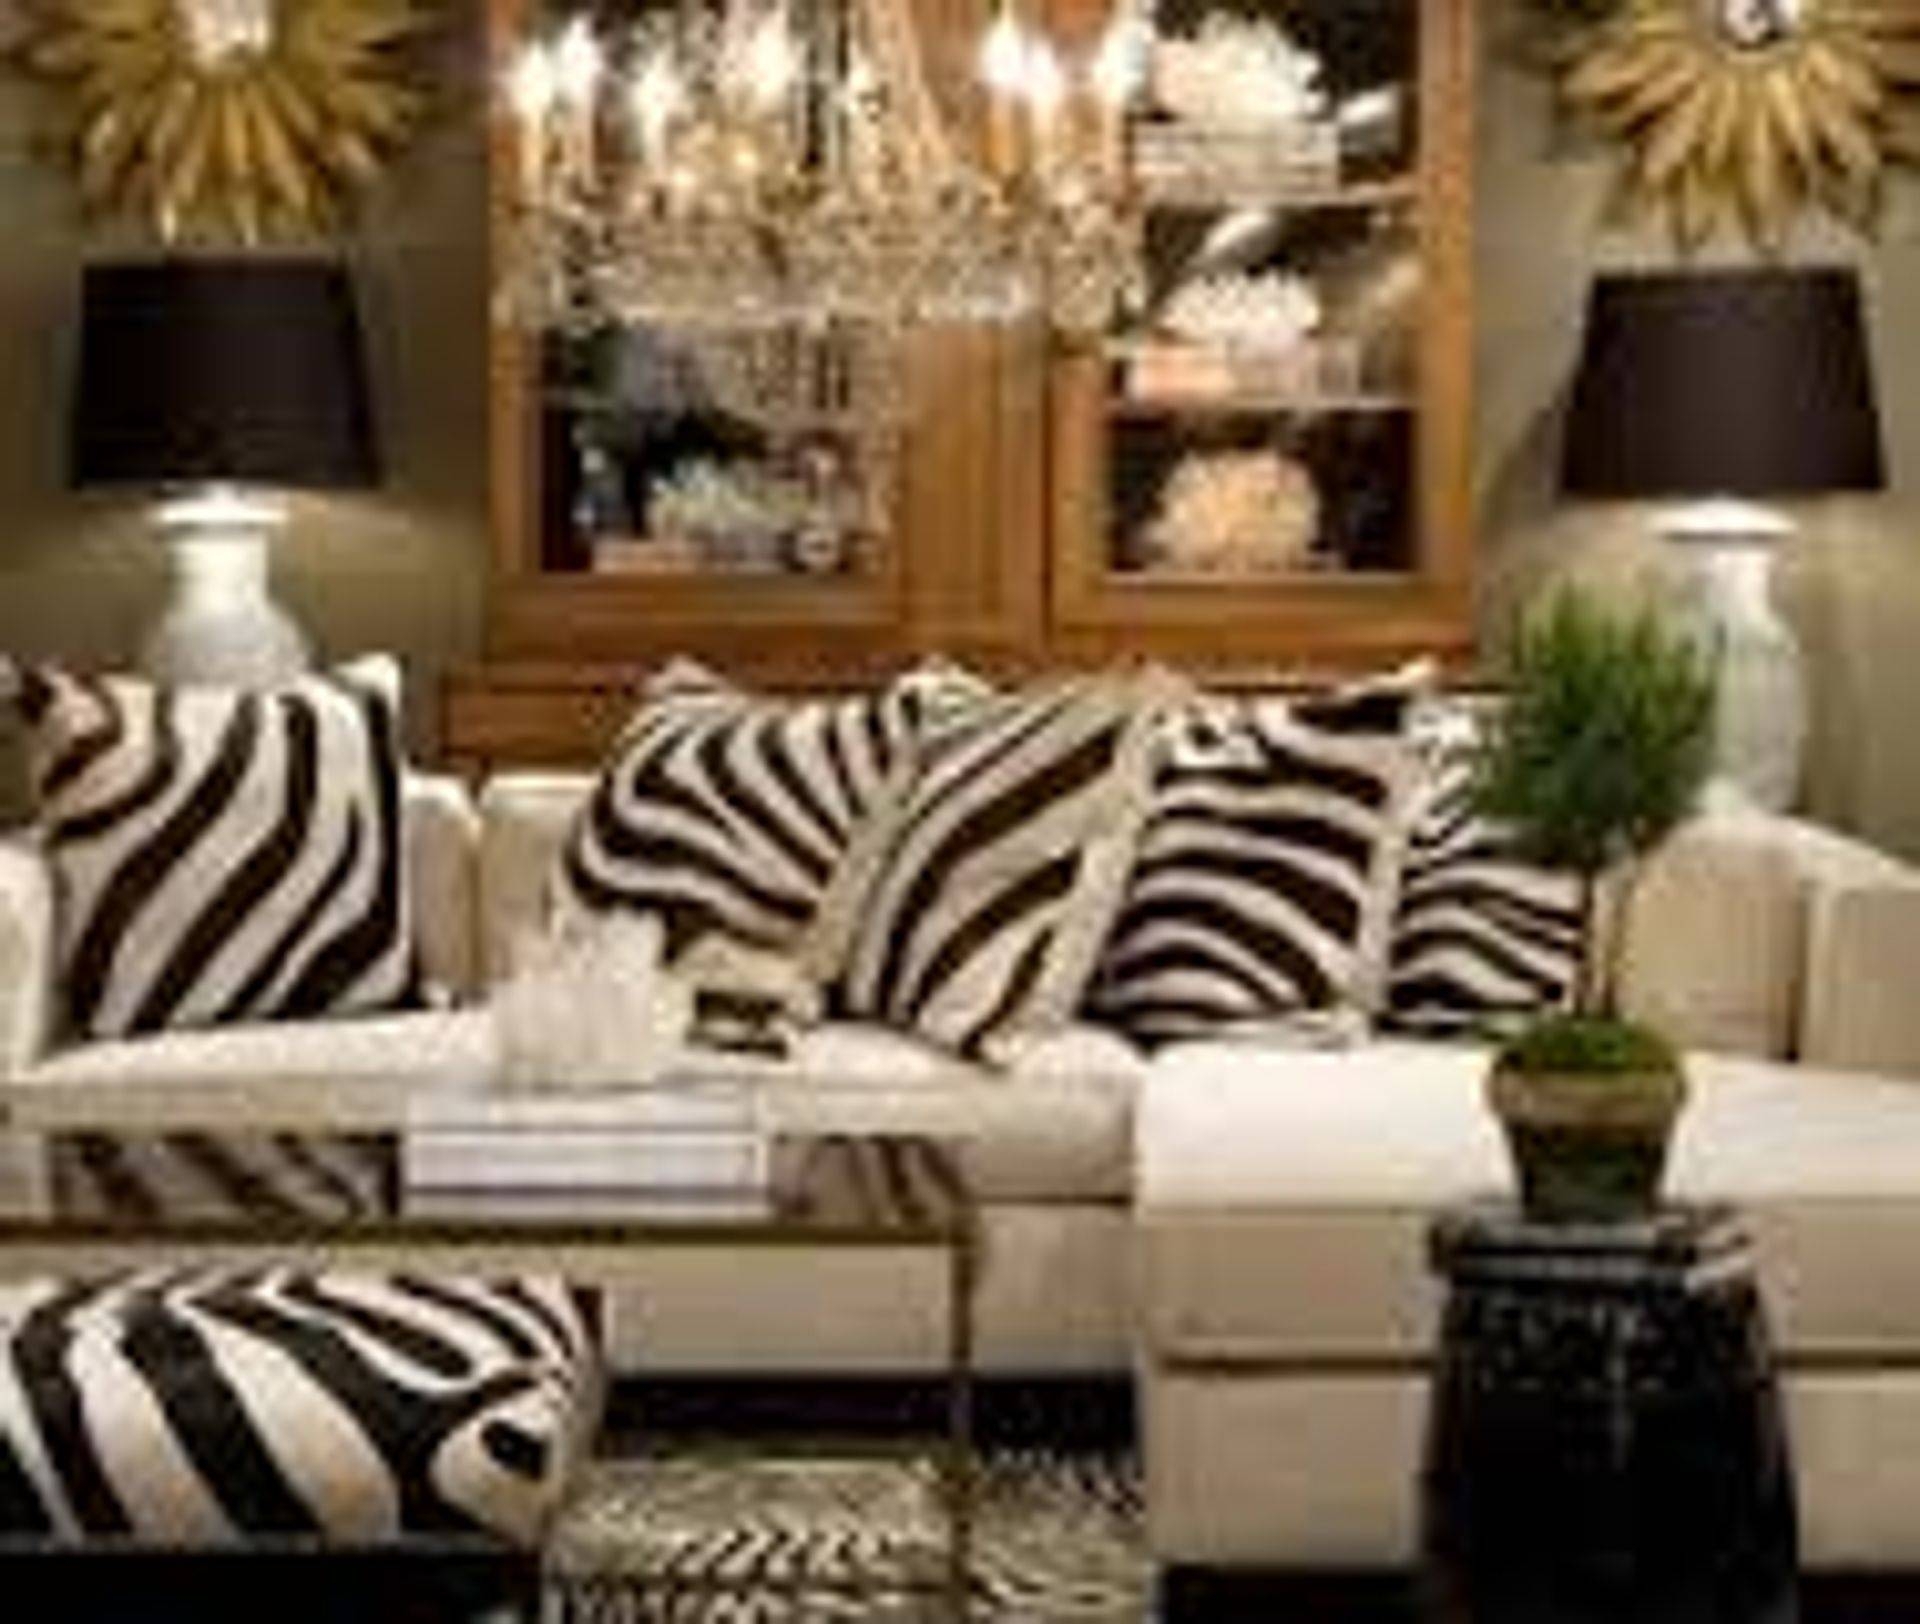 Square Animal Print Leopard Zebra Throw Pillow Case Sofa Cushion Cover #01